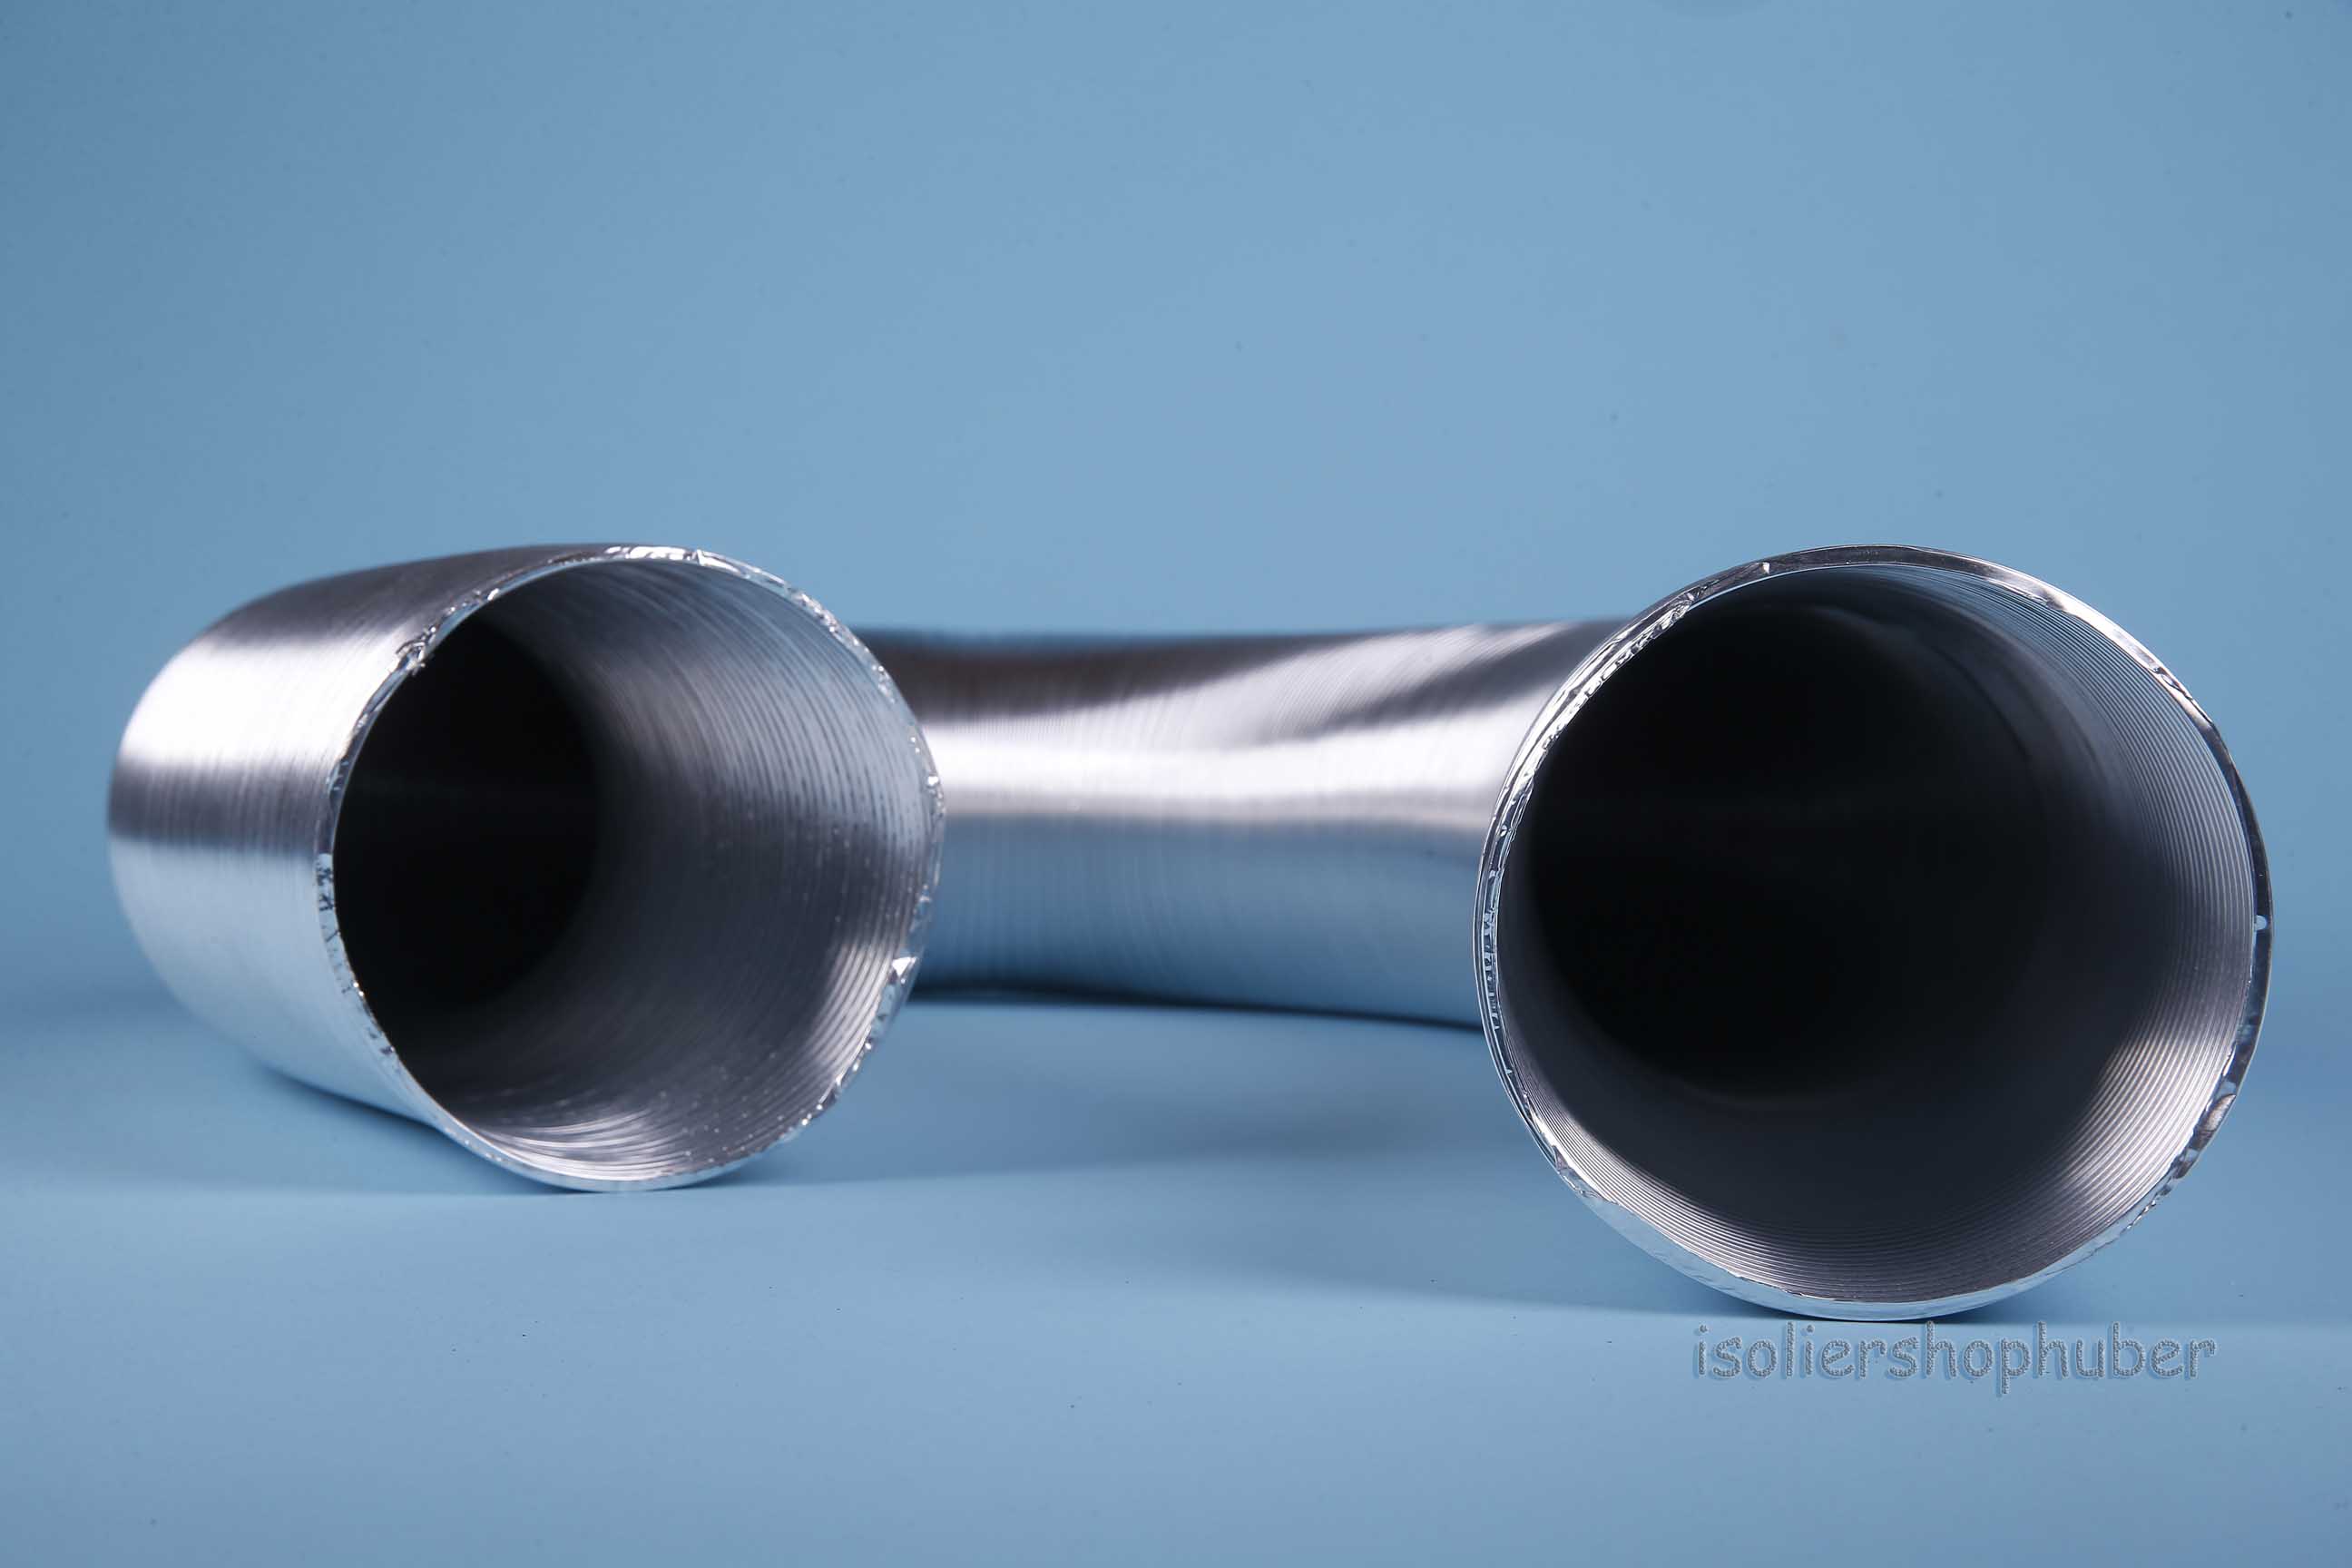 Isoliershophuber - 80 mm Aluminium-Flexrohr, gestauchtes